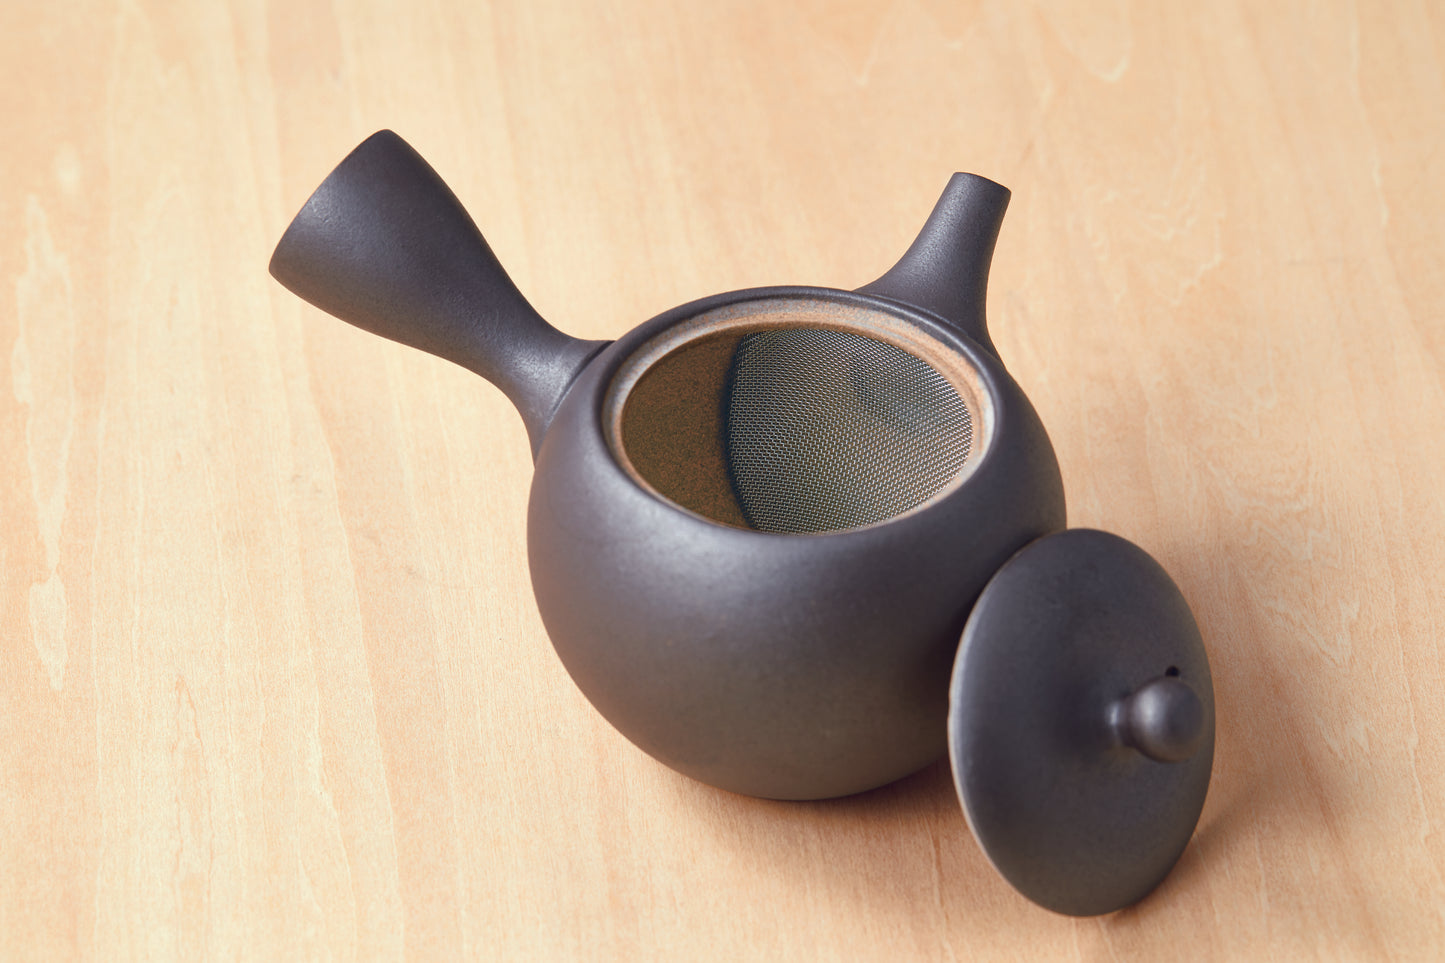 Stoneware kyusu teapot / Round gray Tokonamé